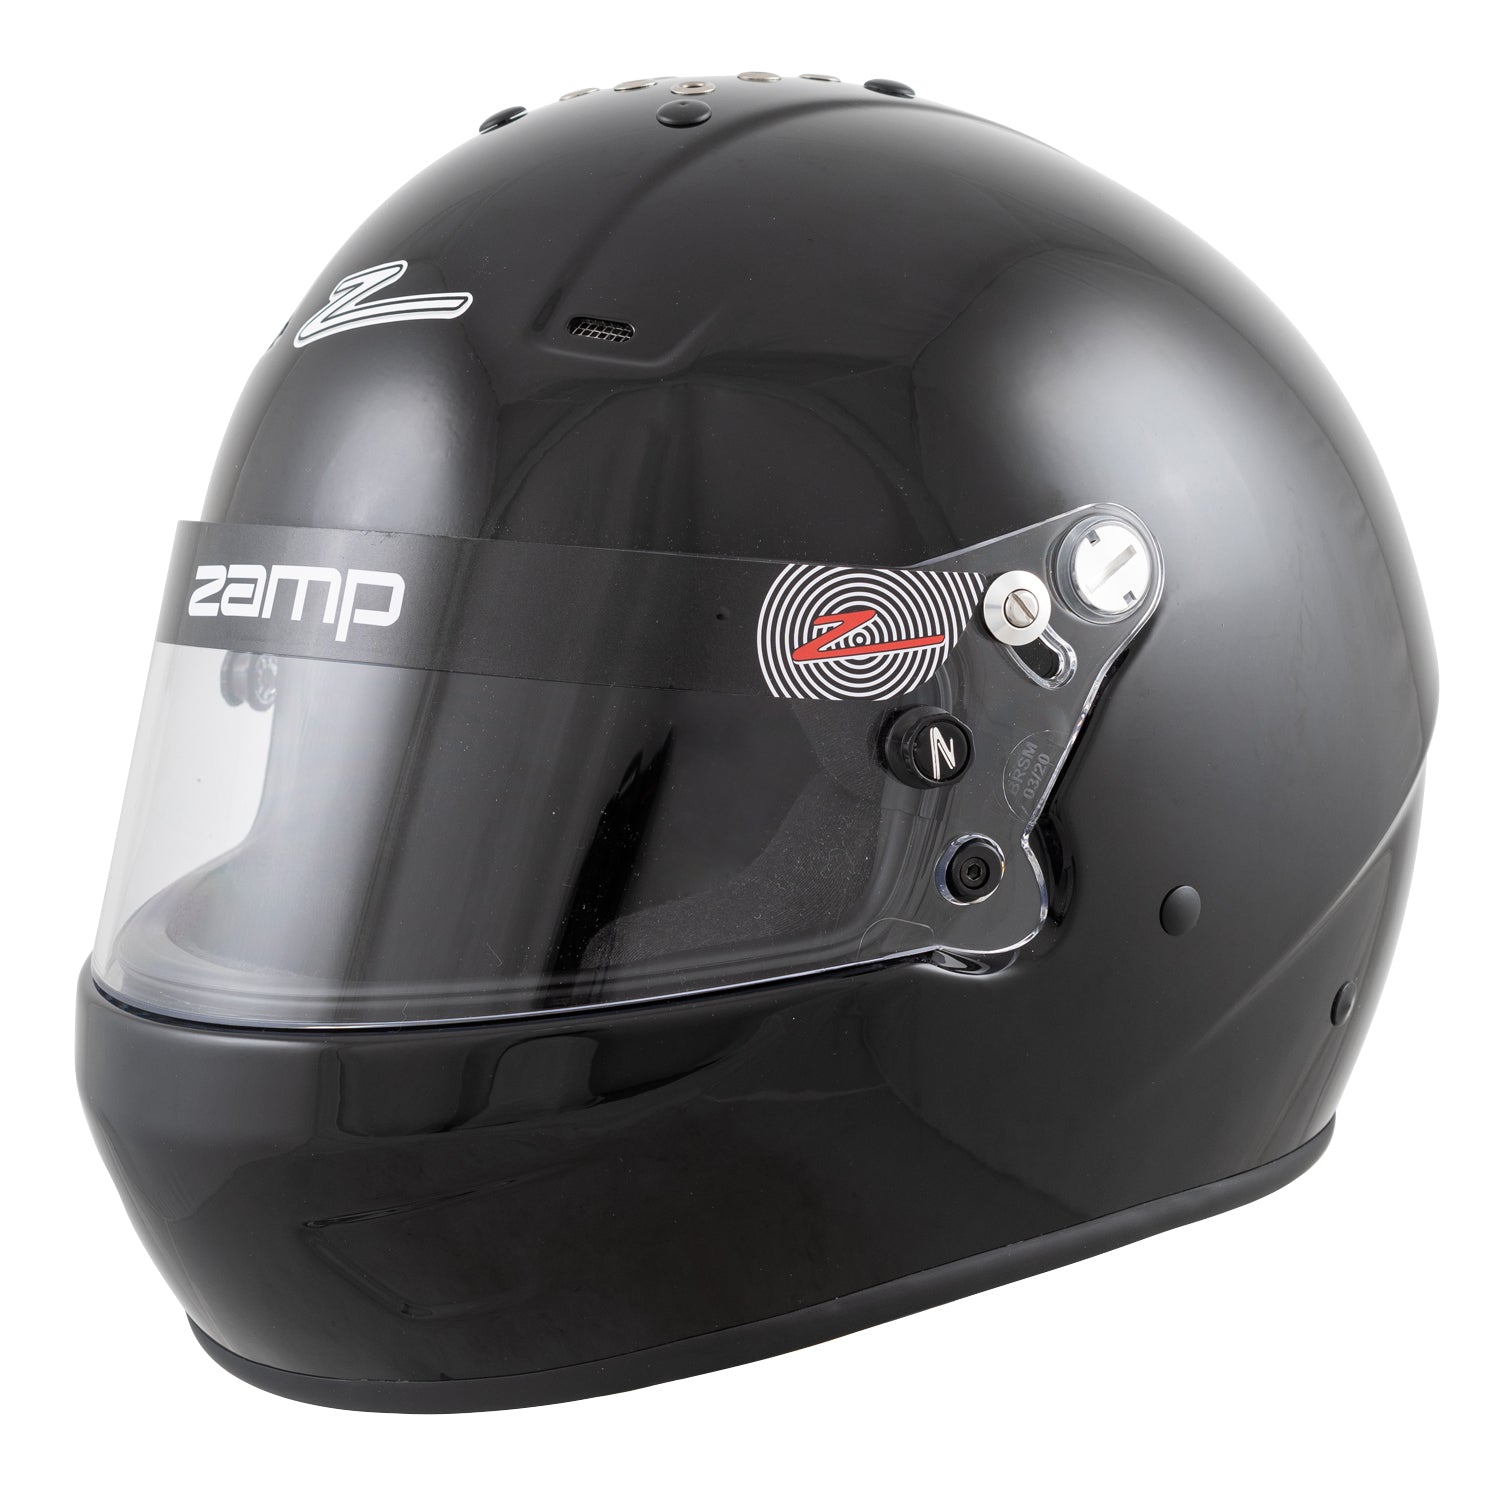 Zamp RZ-56 Helmet (SA2020)